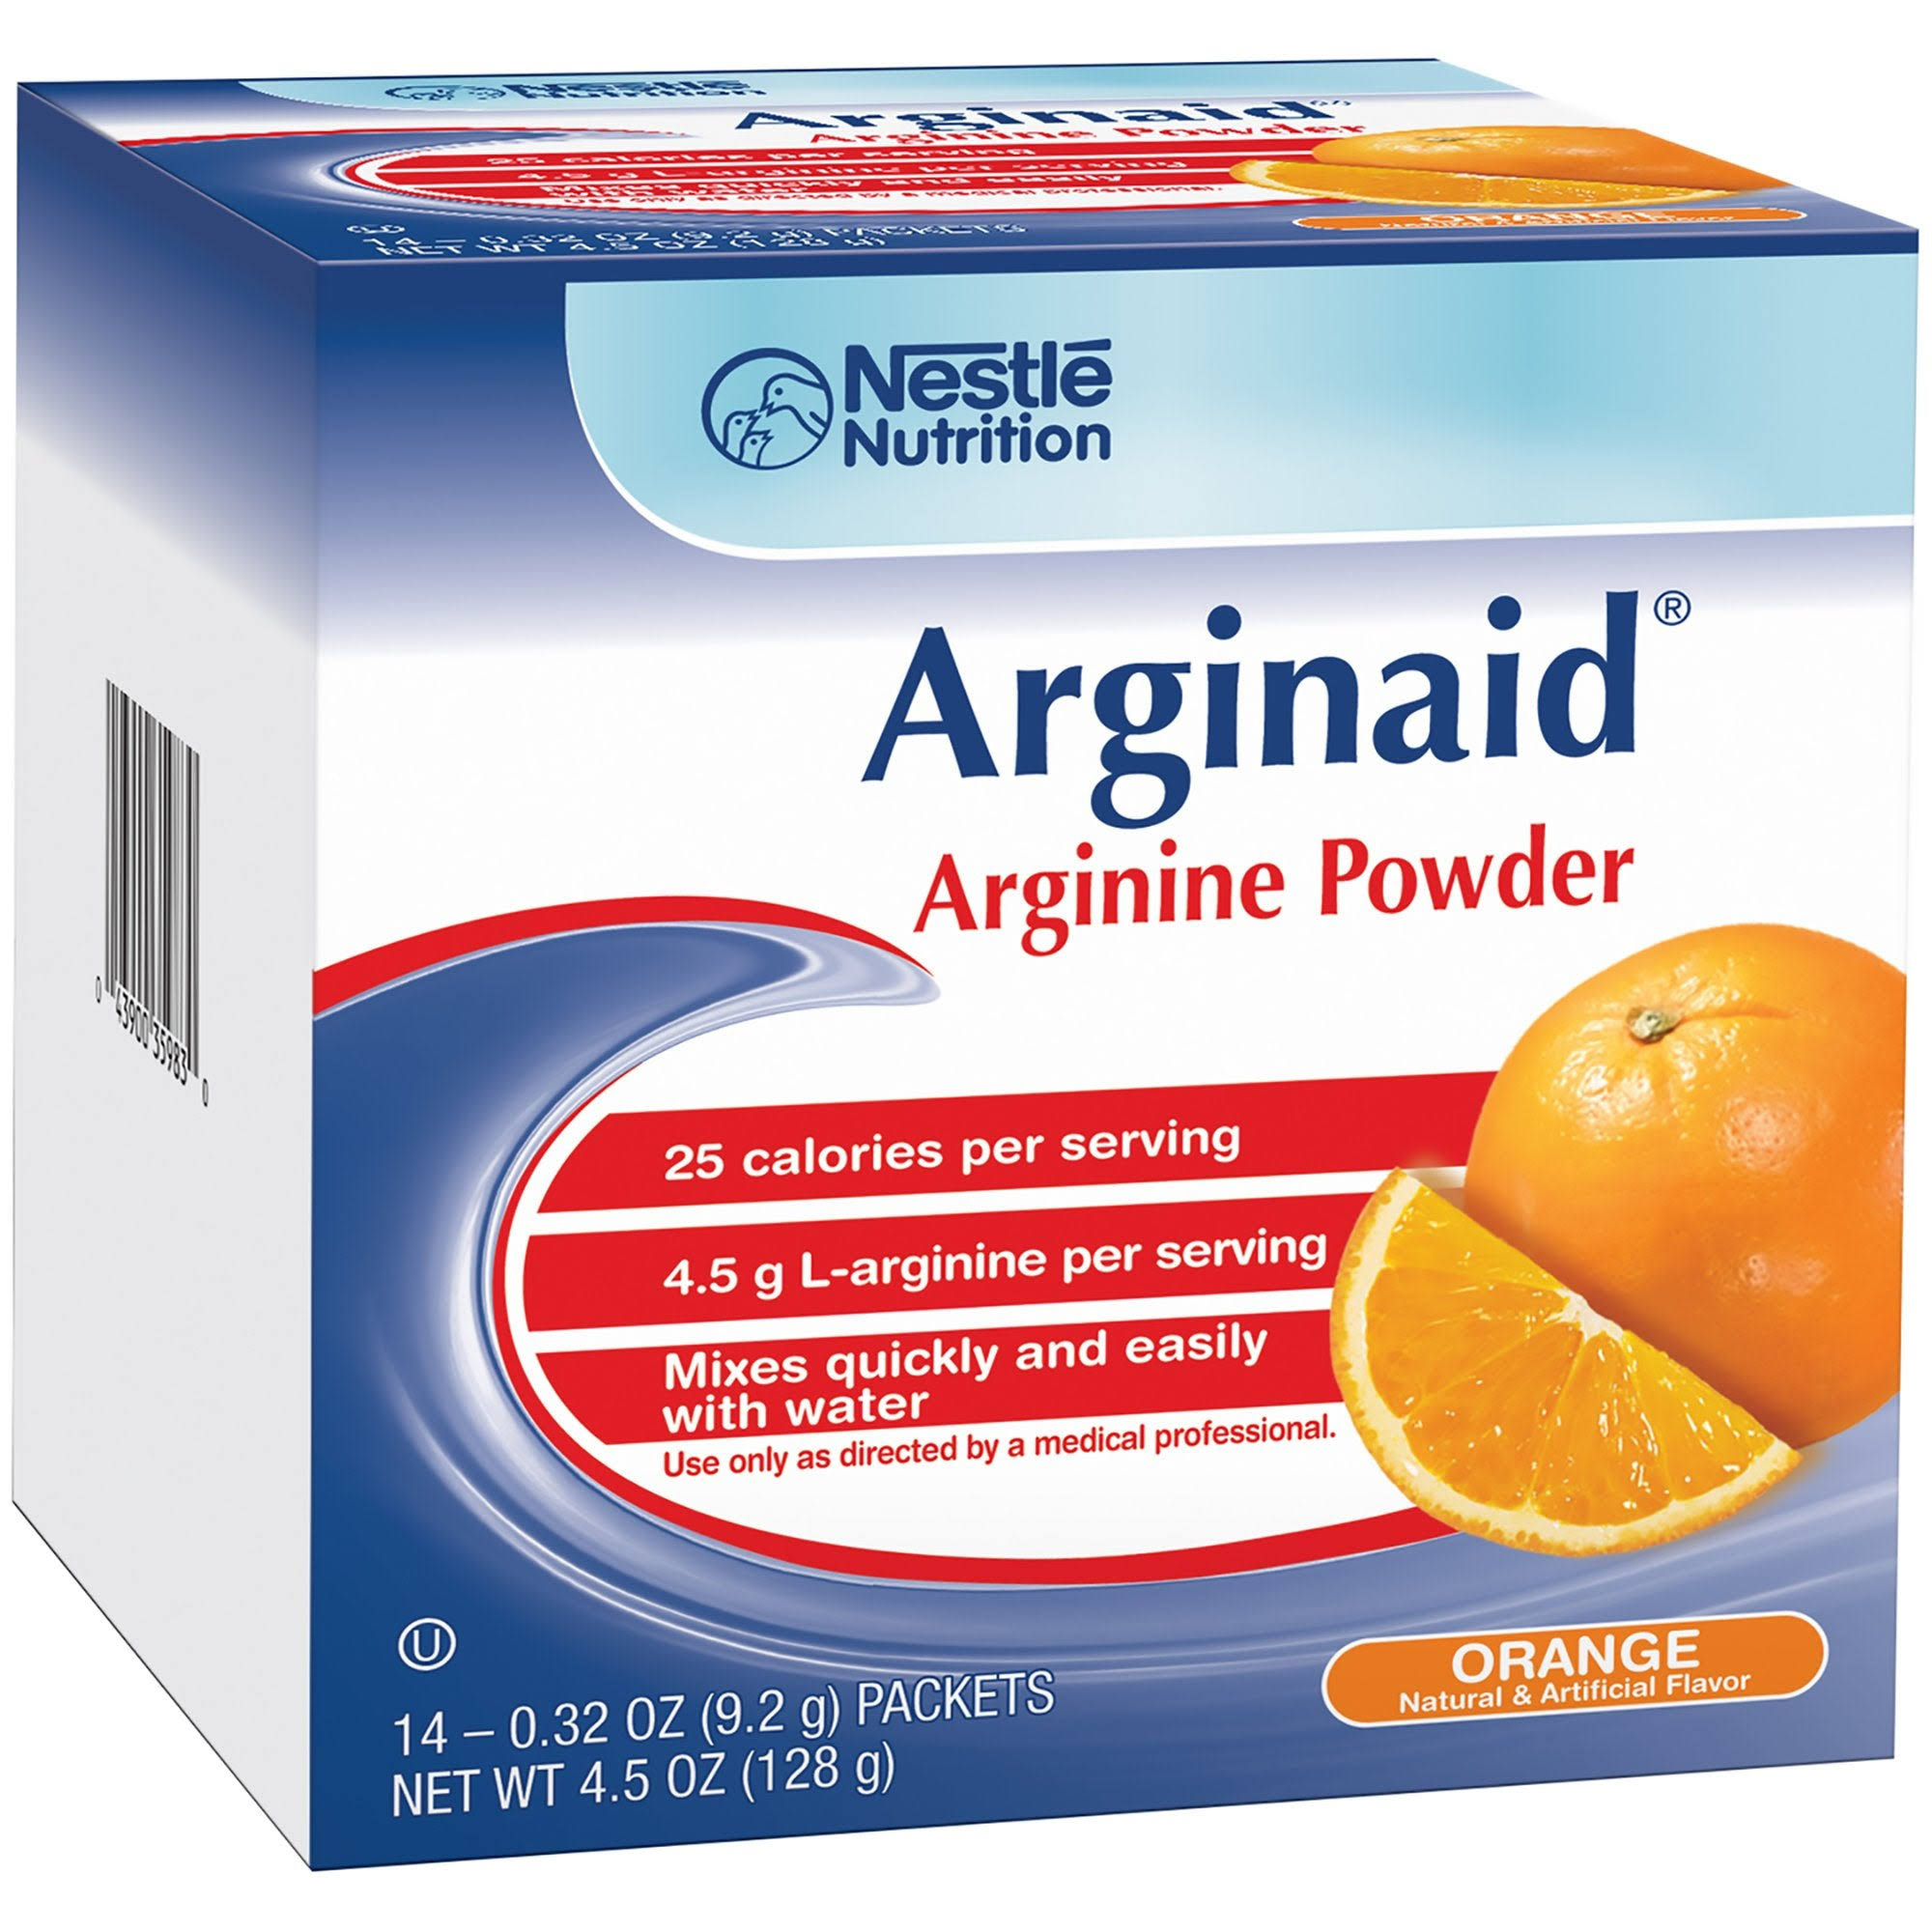 Nestle Arginaid Arginine Powder Sachets - Orange Flavour, x14